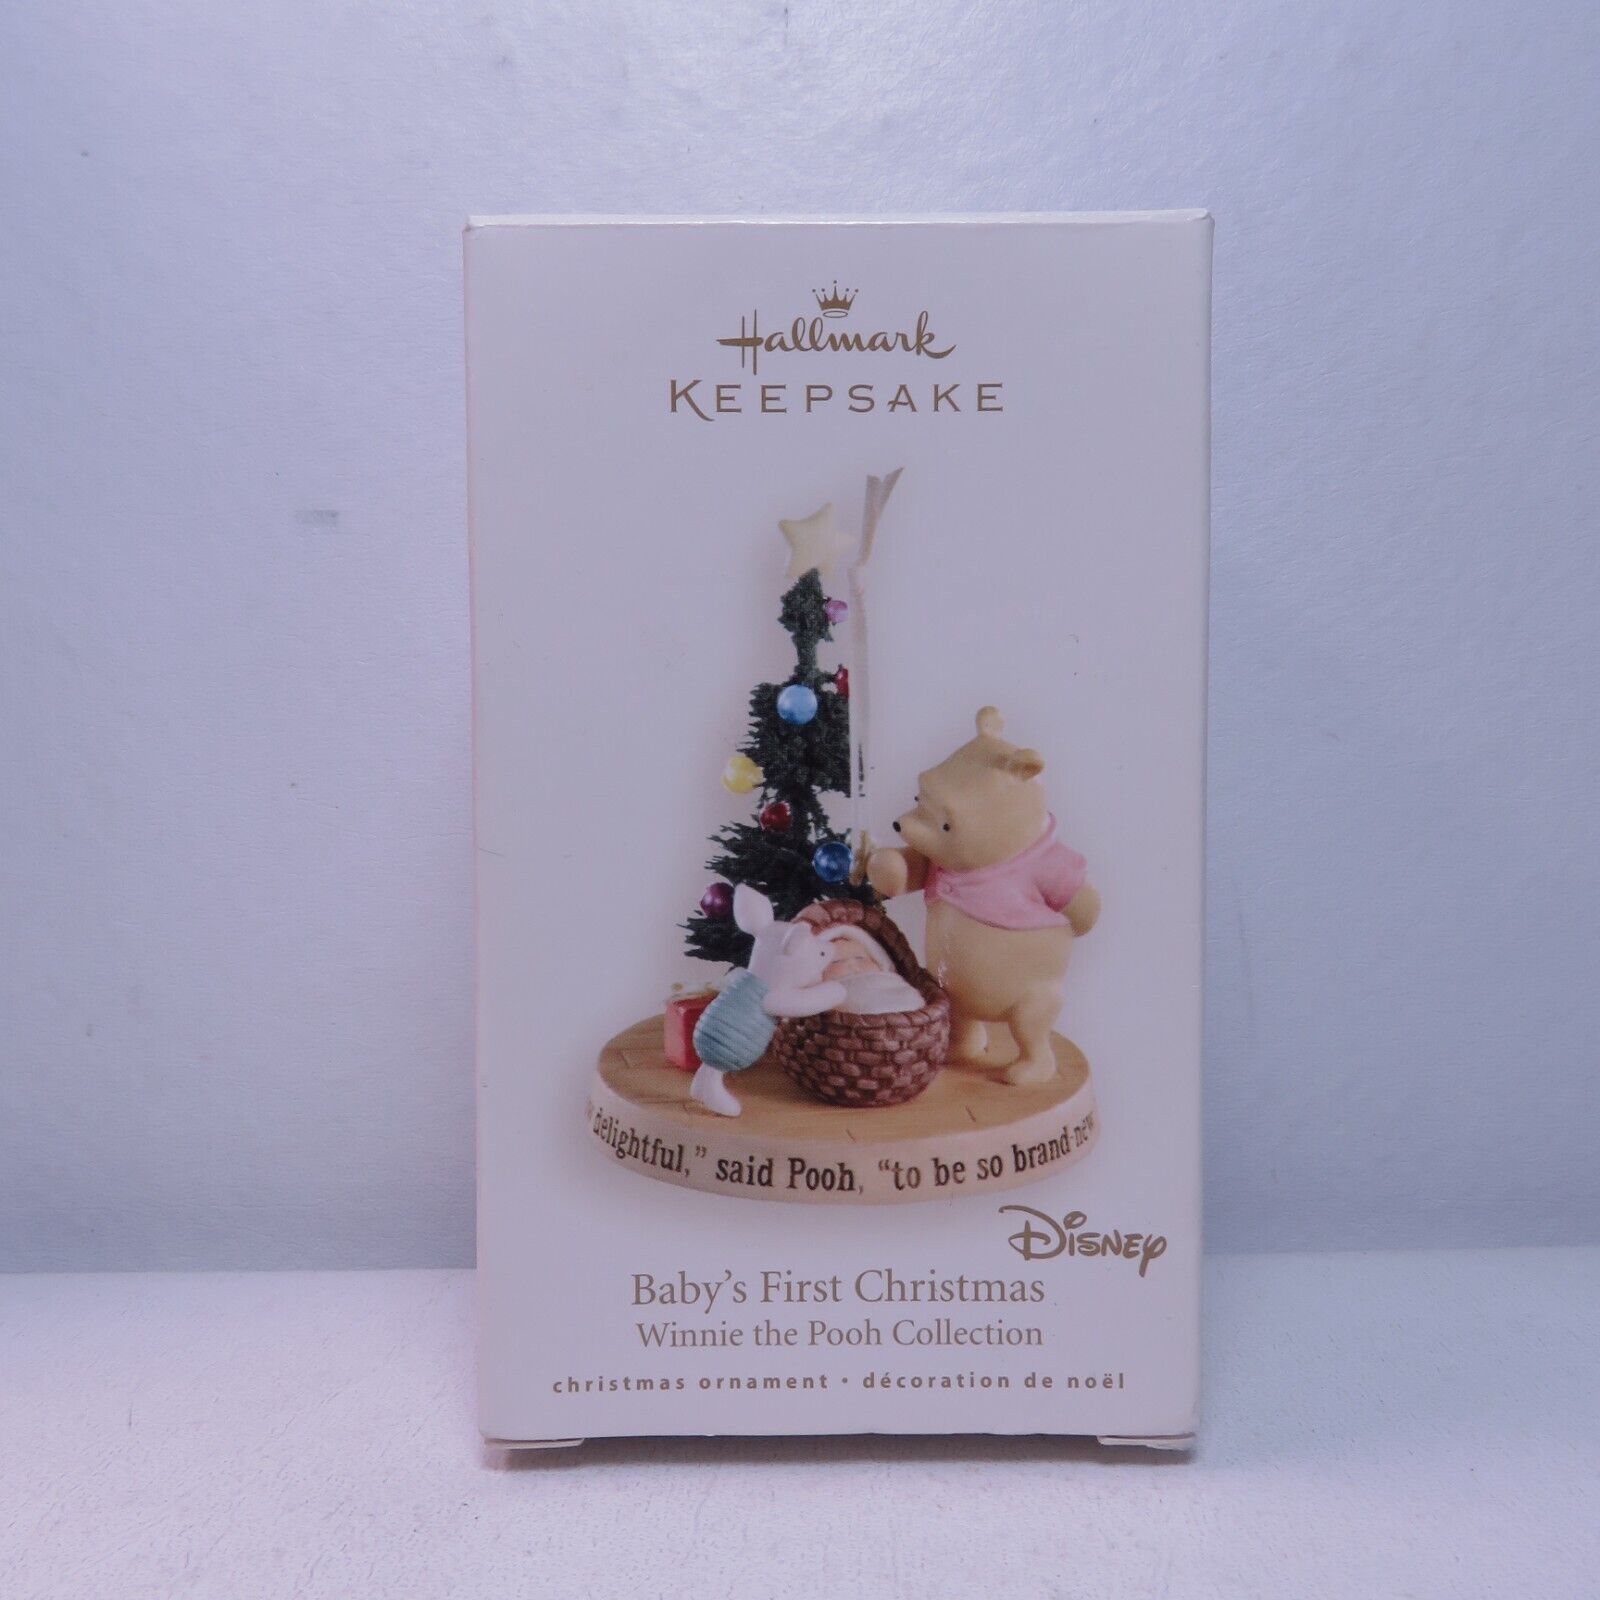 2007 Hallmark Keepsake Disney Baby's First Christmas Winnie The Pooh Ornament